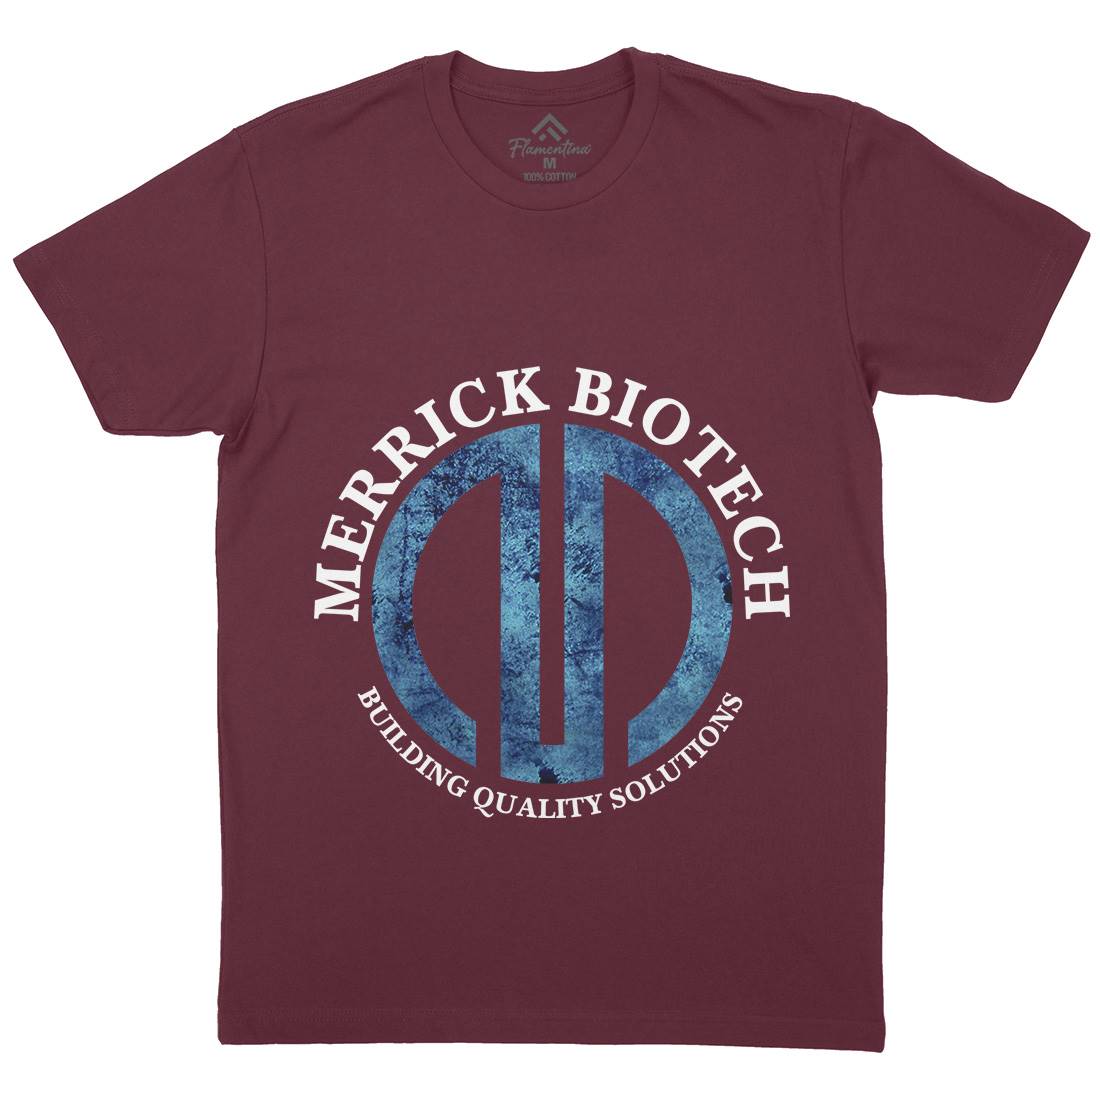 Merrick Biotech Mens Organic Crew Neck T-Shirt Space D393